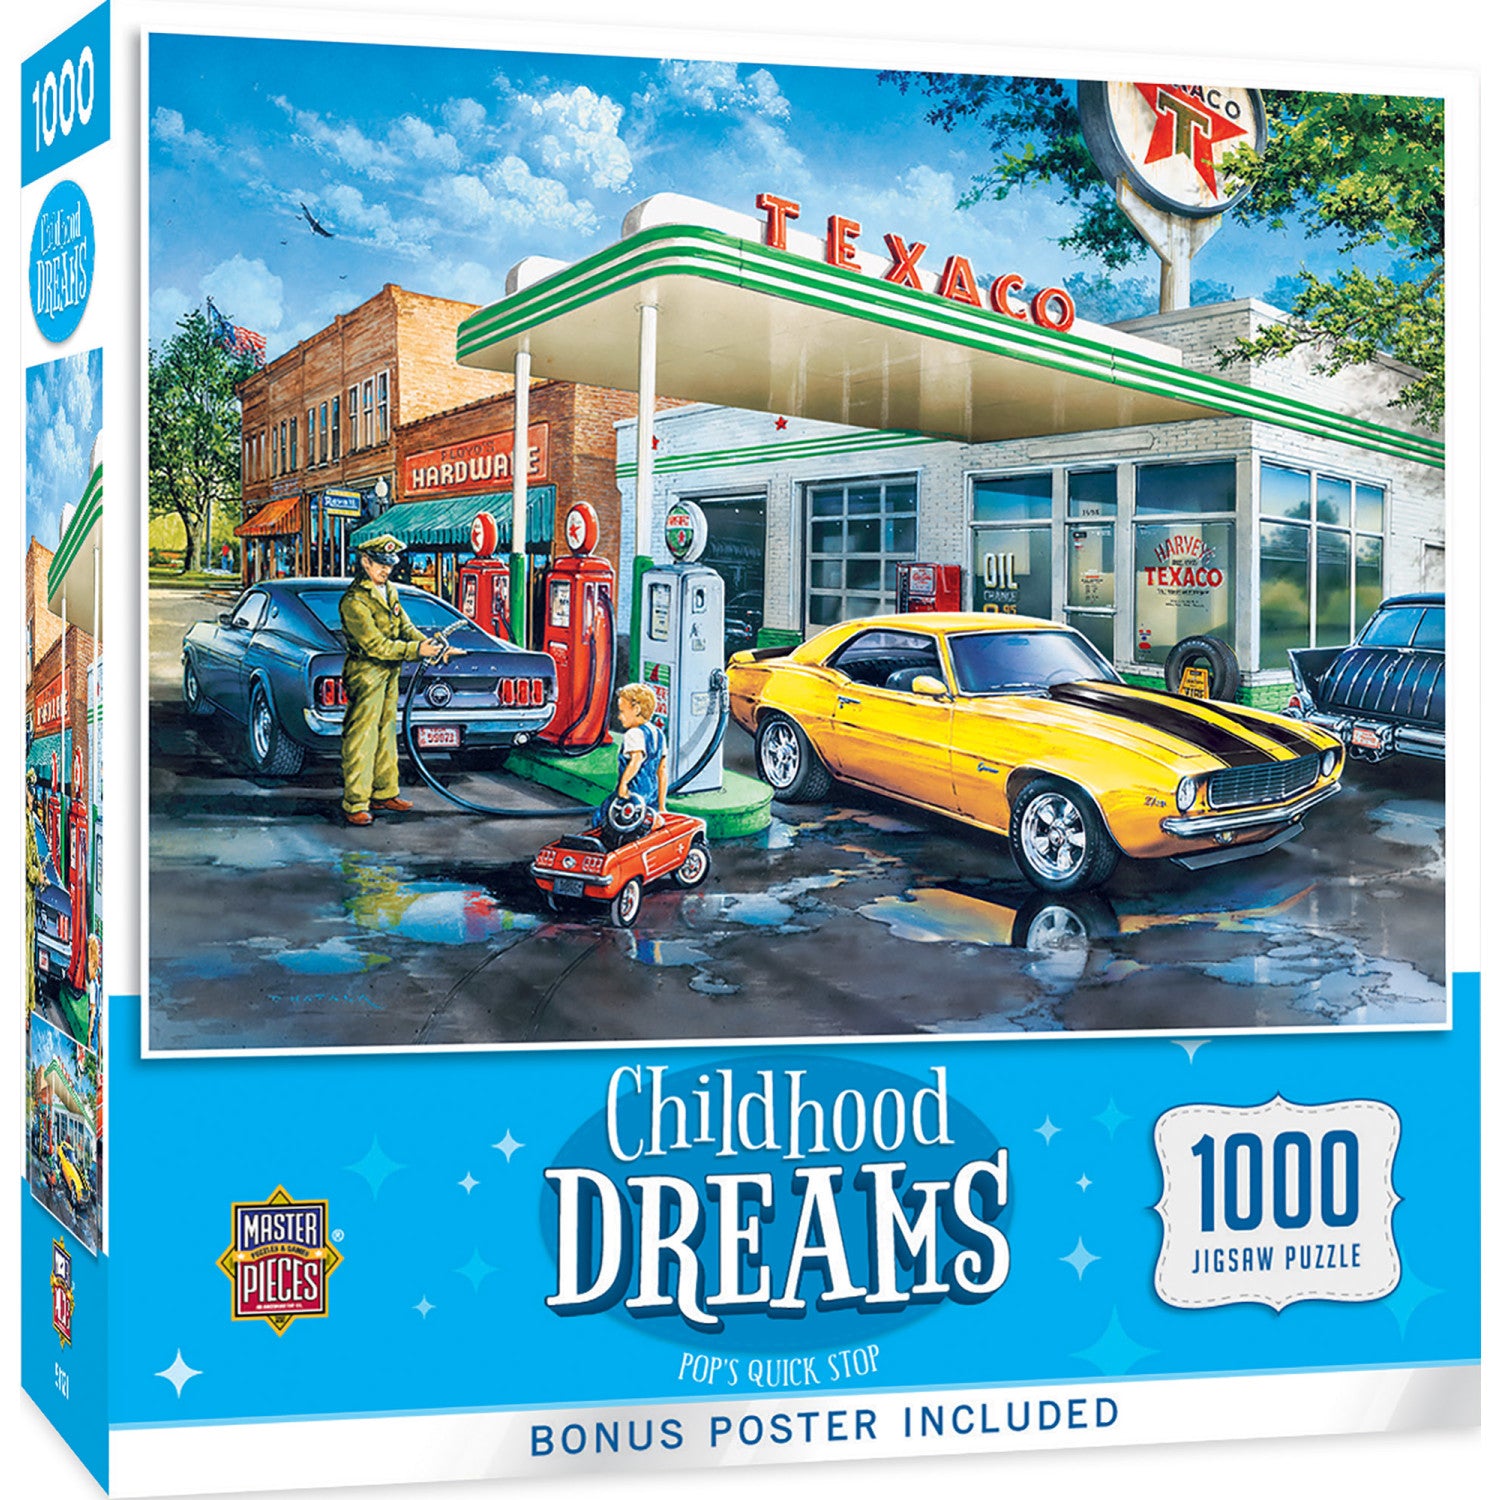 Childhood Dreams - Pop's Quick Stop 1000 Piece Jigsaw Puzzle